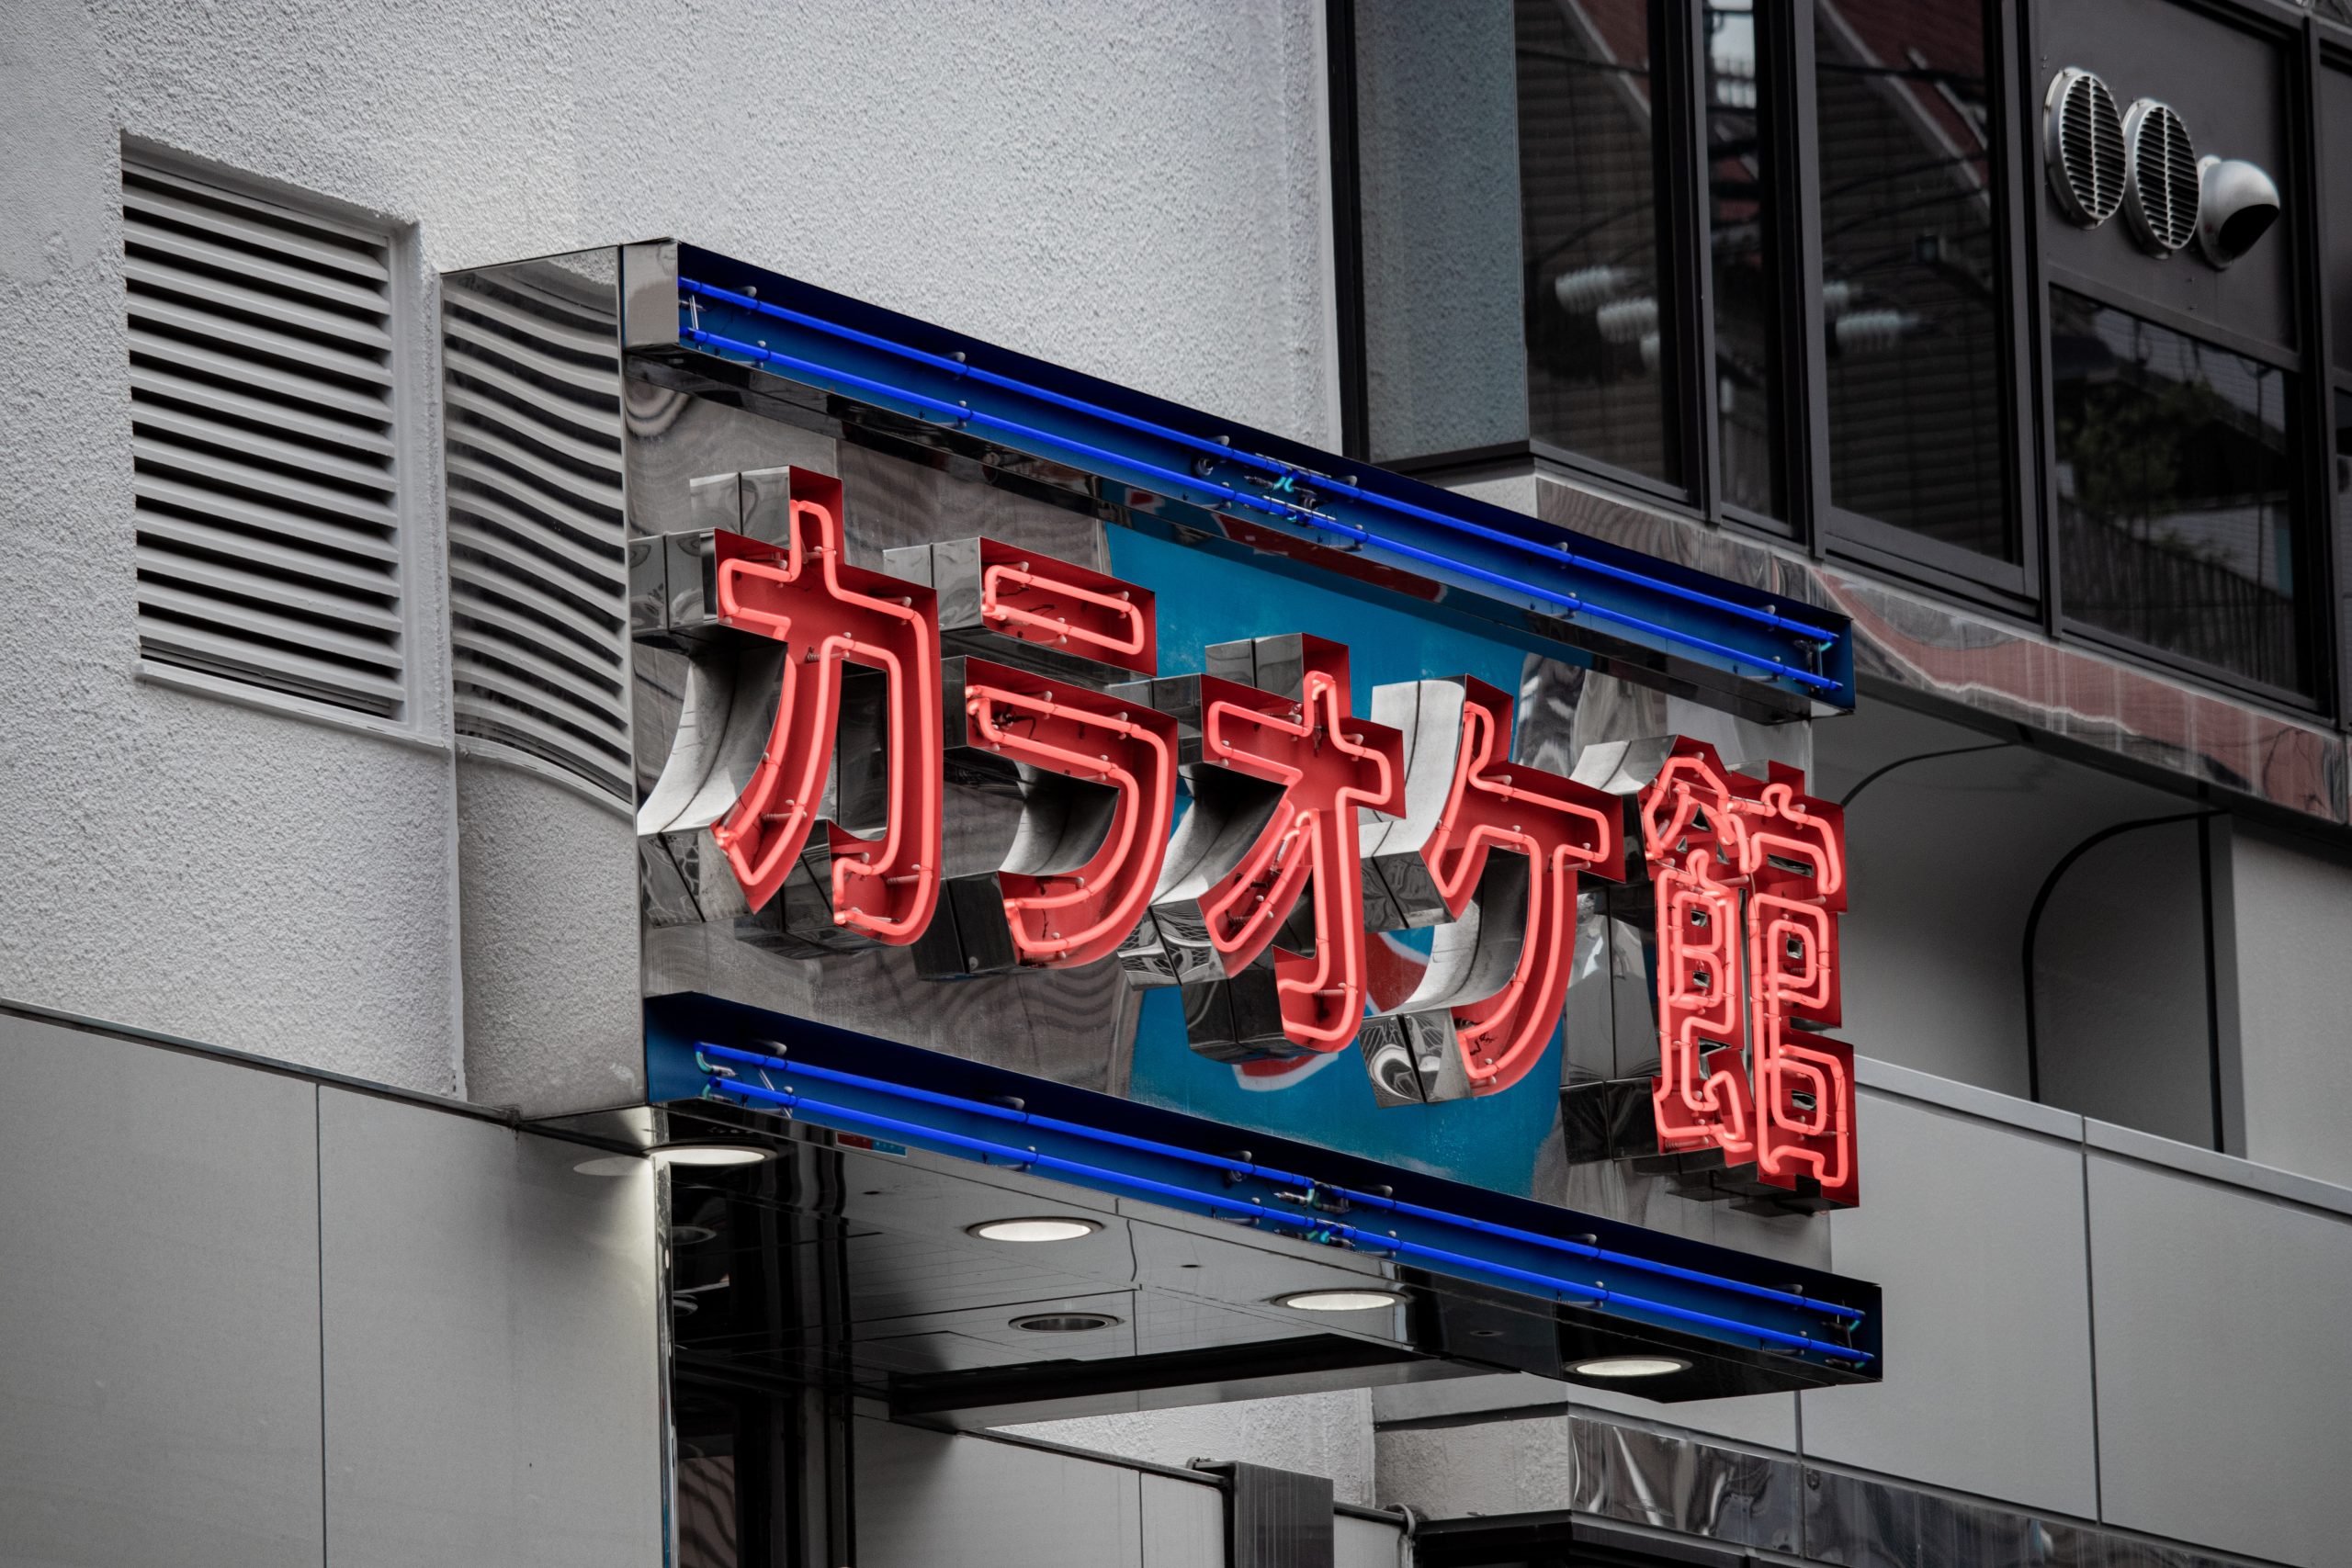 Karaoke sign on a Japanese building